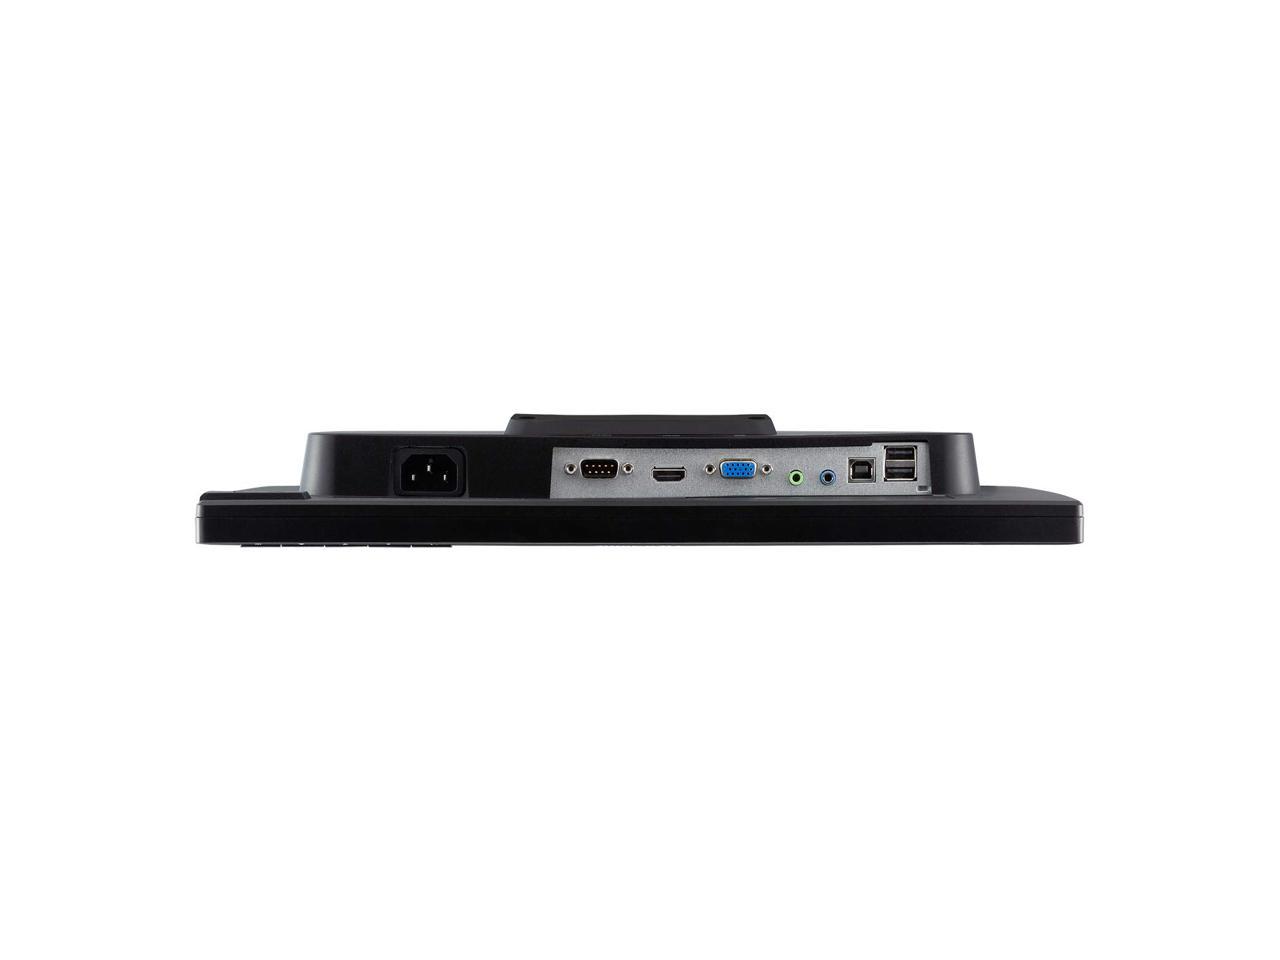 ViewSonic TD1711 17" SXGA 1280 x 1024 60Hz HDMI VGA Built-in Speakers USB 2.0 Hub Backlit LED Resistive Touchscreen Monitor